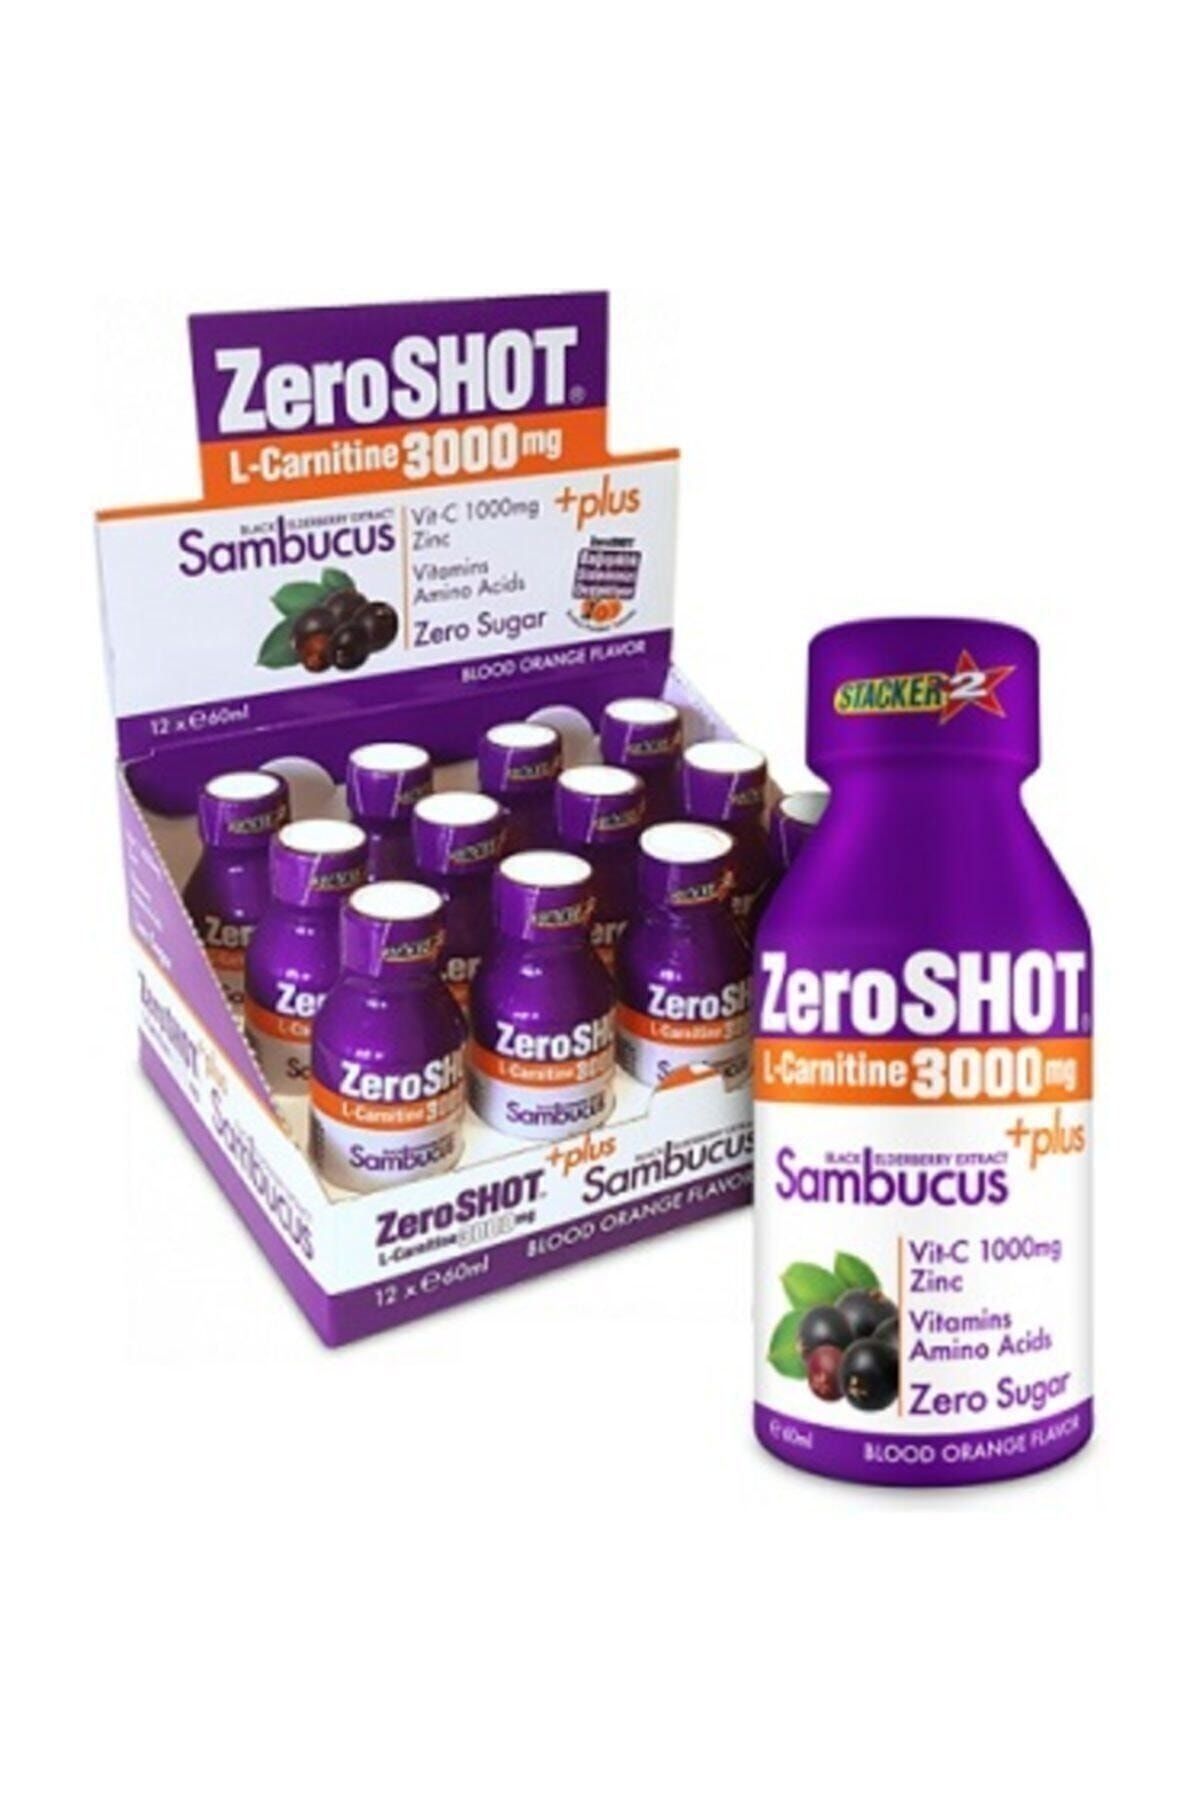 Zero Shot Zeroshot 3000mg L-carnitine Plus Sambucus 12 *60ml - Kan Portakal Aroma